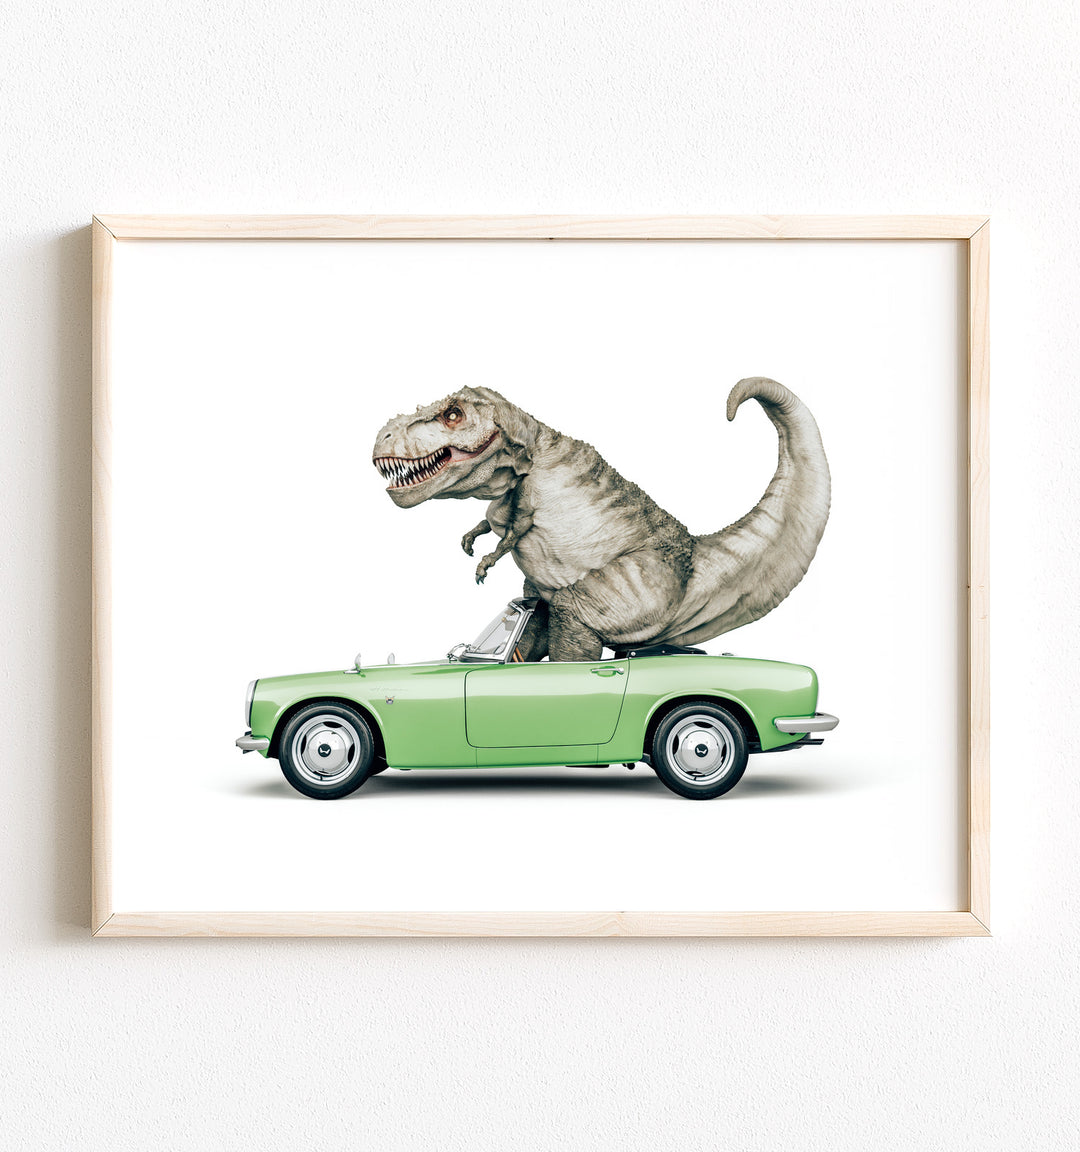 Dinosaur art print of a Tyrannosaurus rex - t-rex - riding in a green convertible car against a white background.